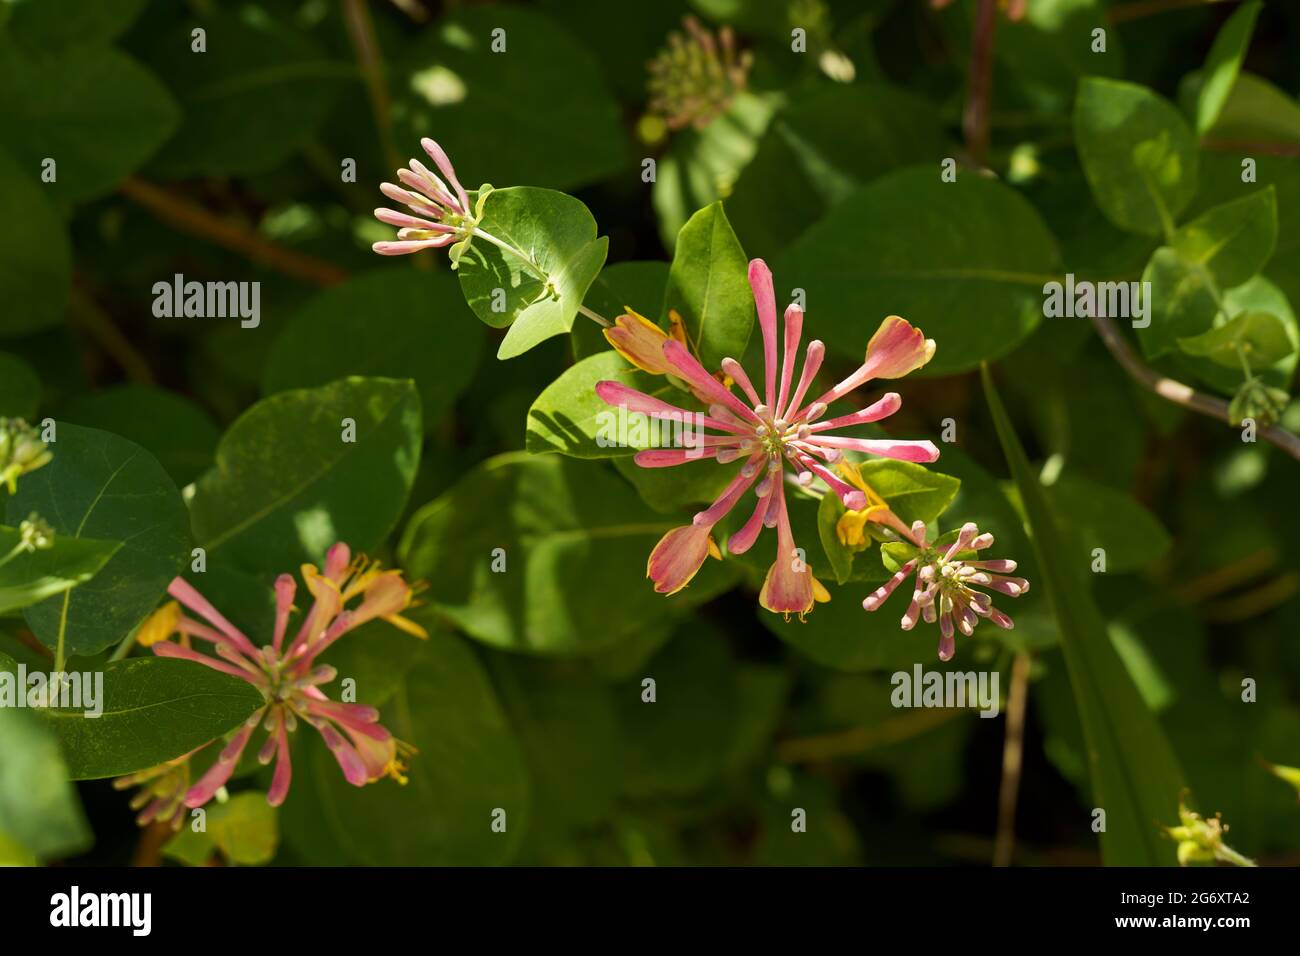 Honeysuckle green flower with pink red orange flowers Lonicera periclymenum  Stock Photo